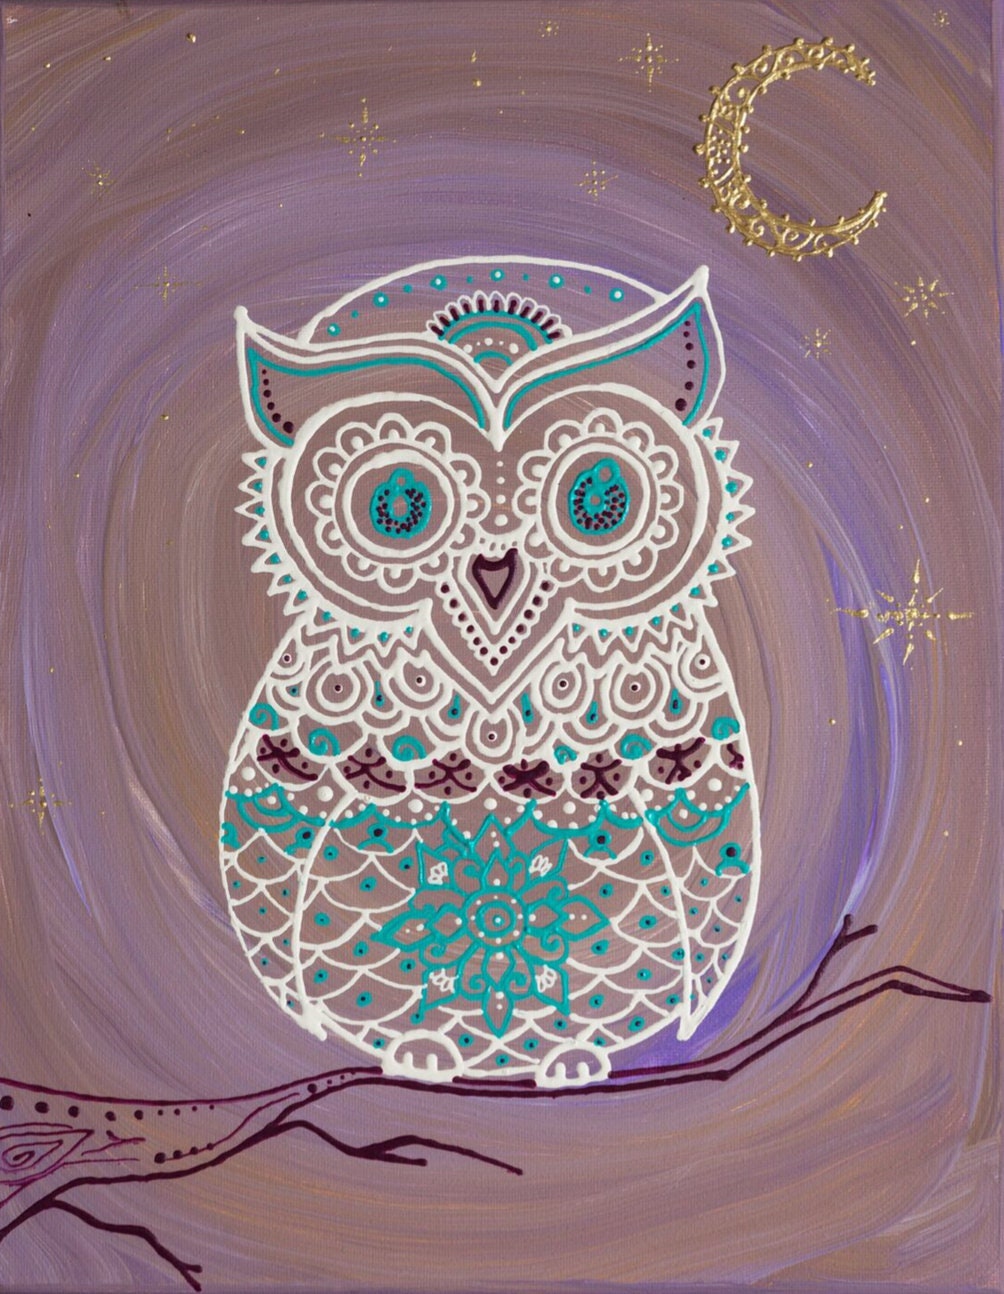 Night Owl 12×15.5" Art 13×16.5" w border l Hand Painted Lavendar, White, Gold Owl Art Print Decor l Owl on Tree Branch l Moon Print